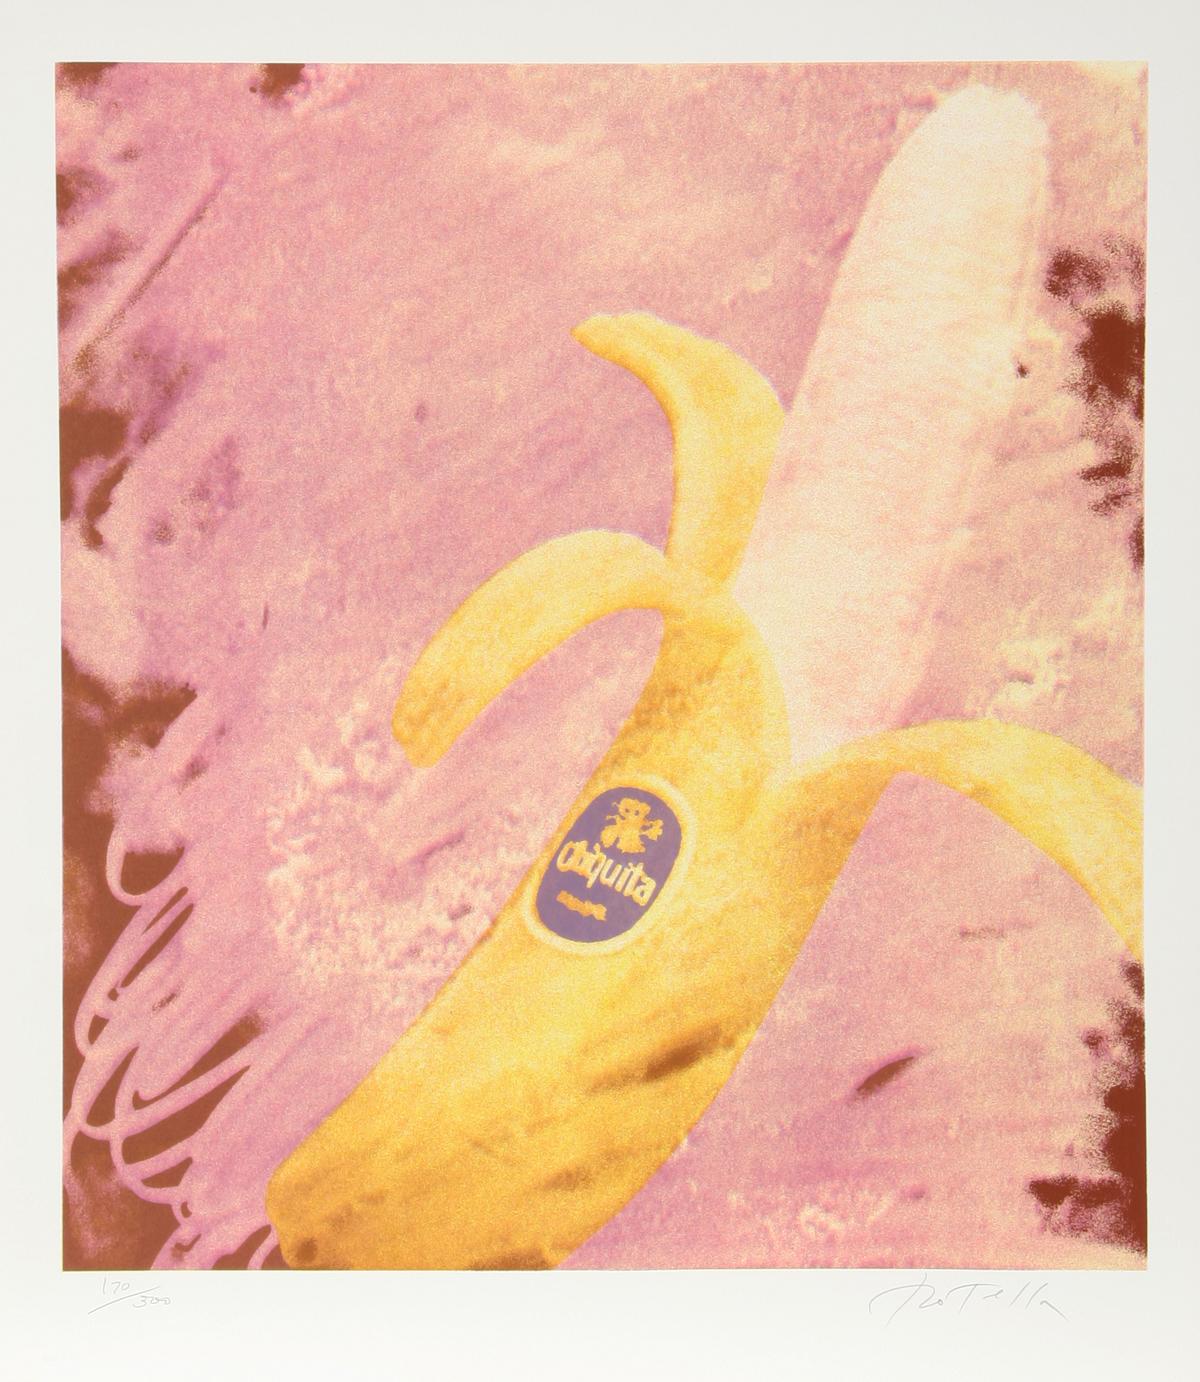 chiquita banana commercial